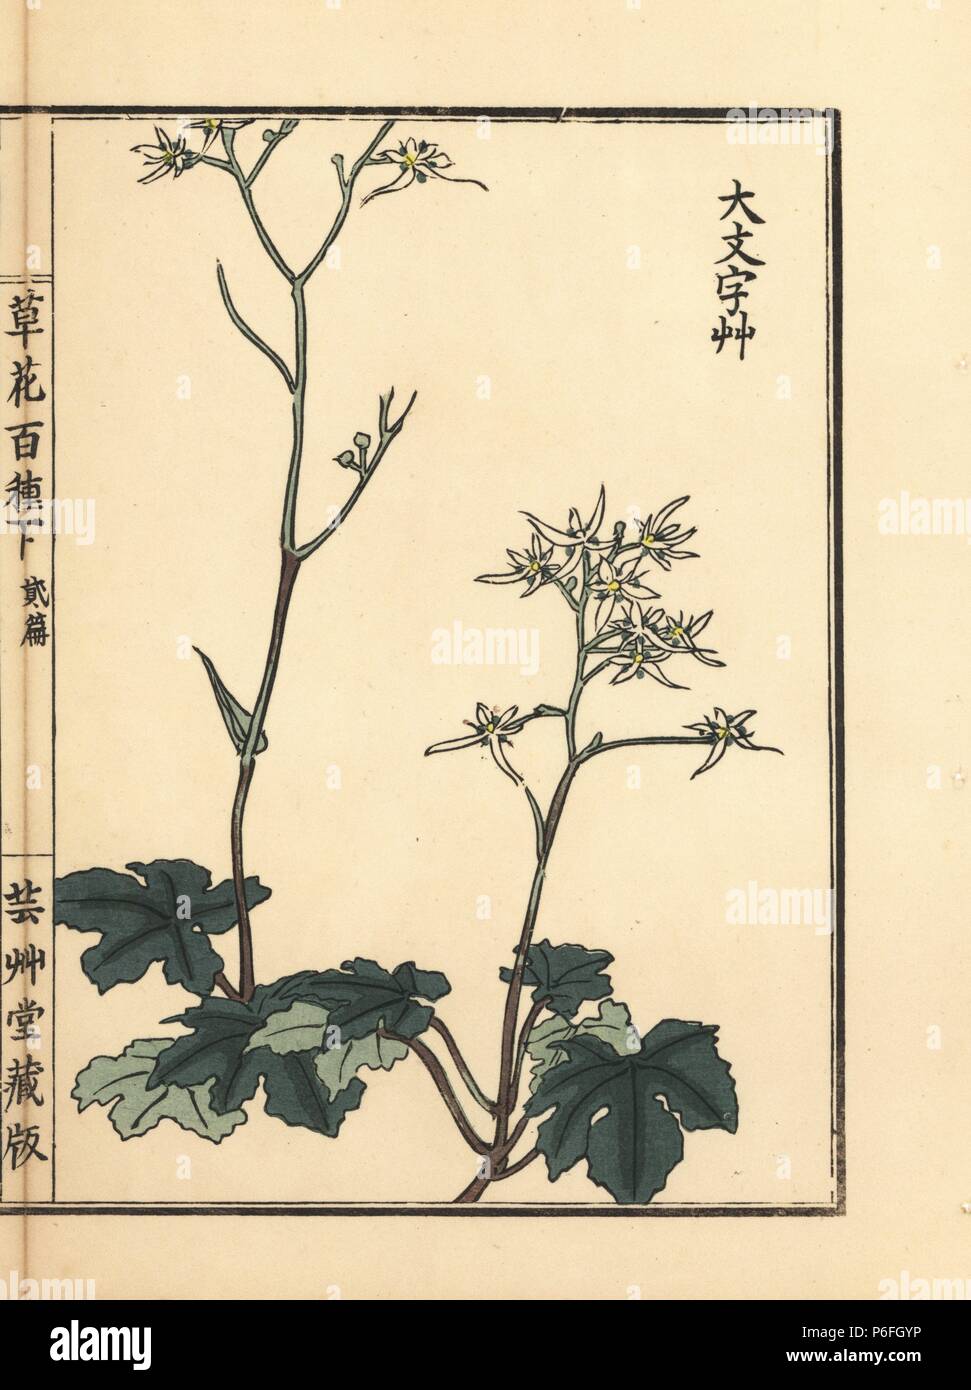 Daimonjisou or saxifrage, Saxifraga fortunei var. alpina. Handcoloured woodblock print by Kono Bairei from Kusa Bana Hyakushu (One Hundred Varieties of Flowers), Tokyo, Yamada, 1901. Stock Photo